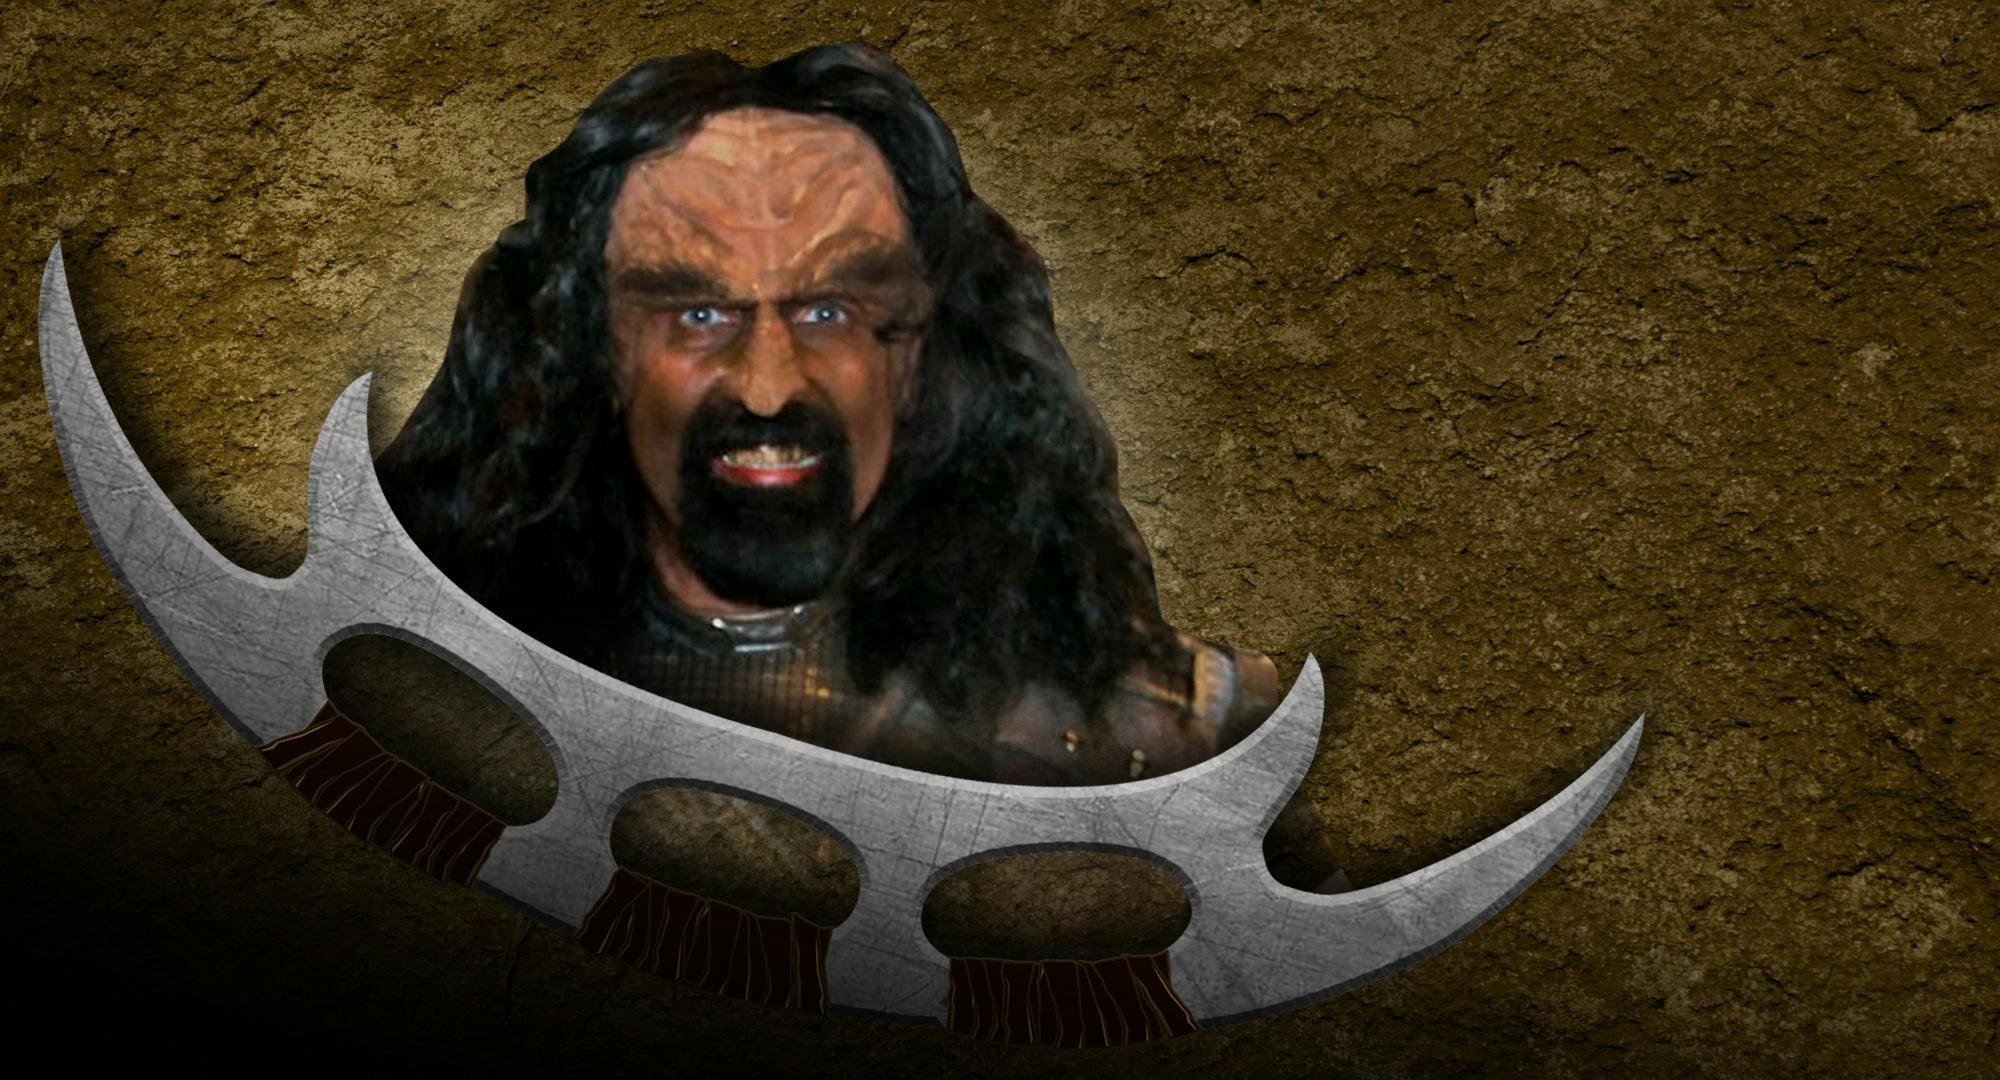 Klingon Cosplayer